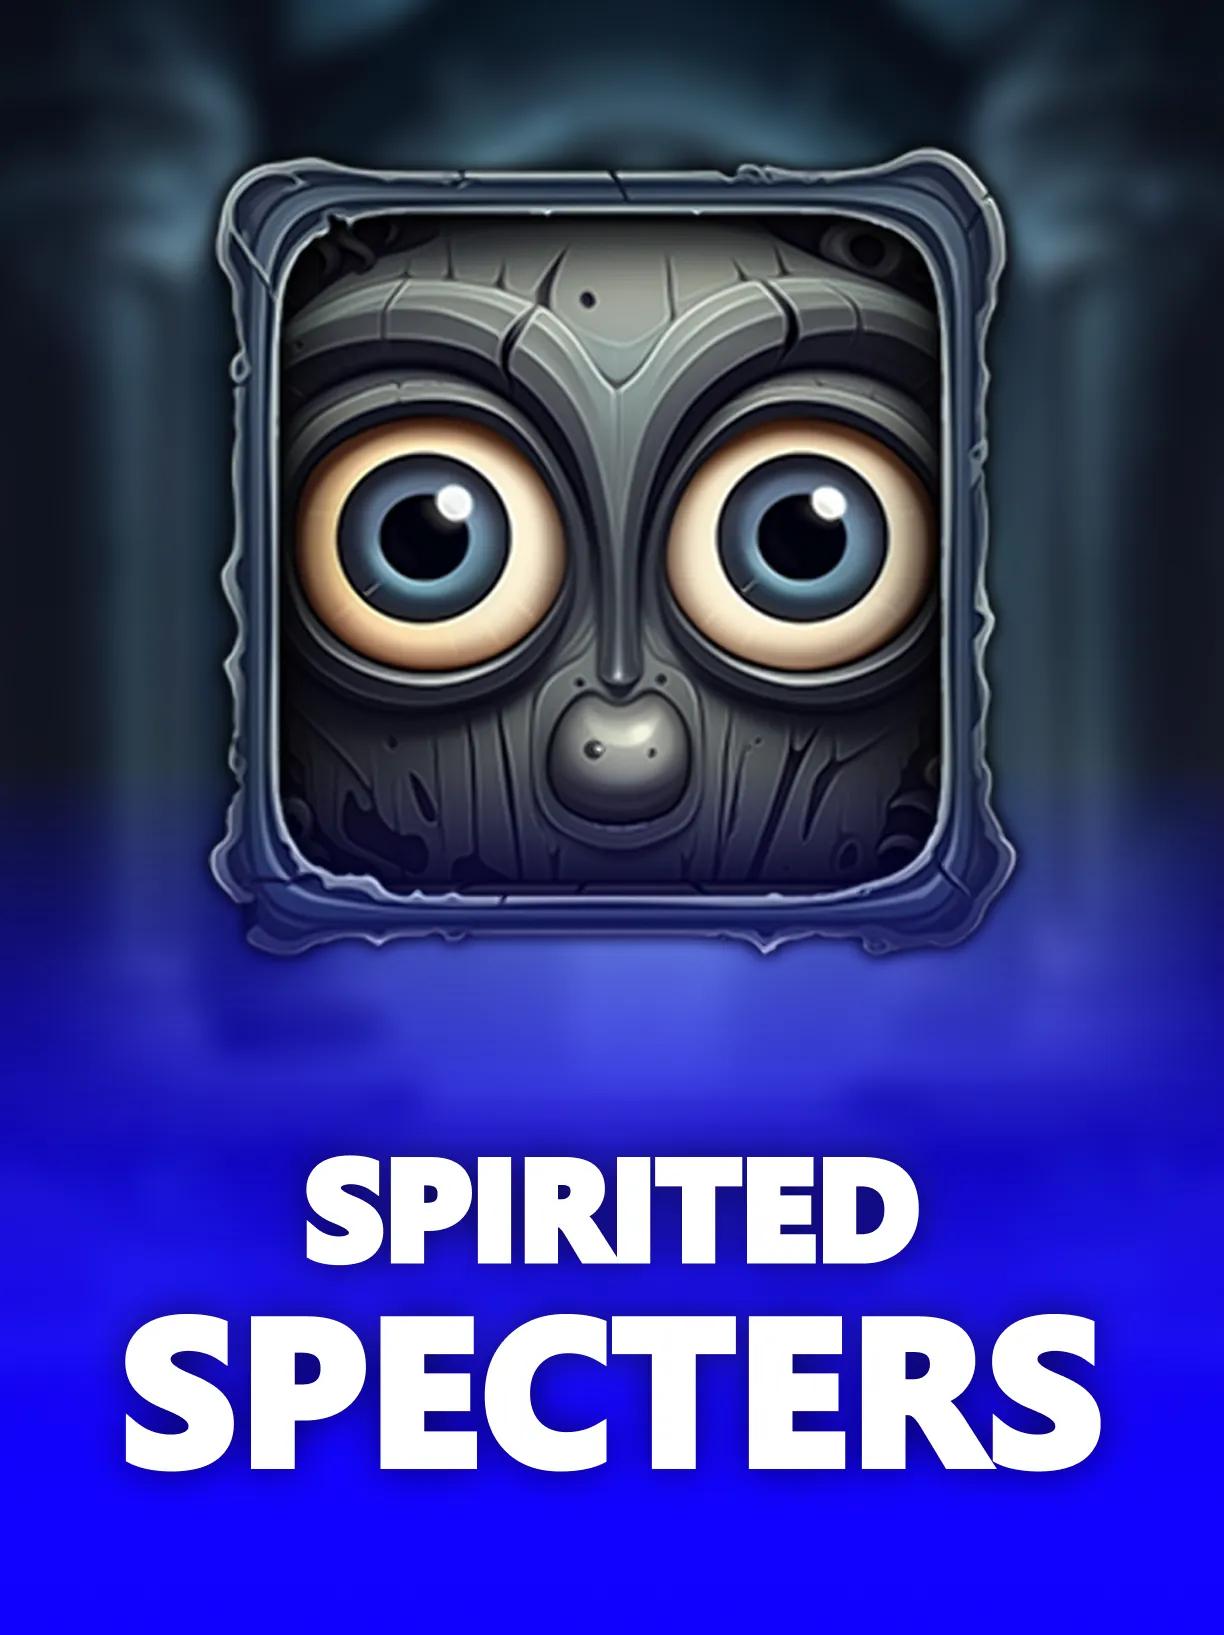 ug_Spirited_Specters_square.webp